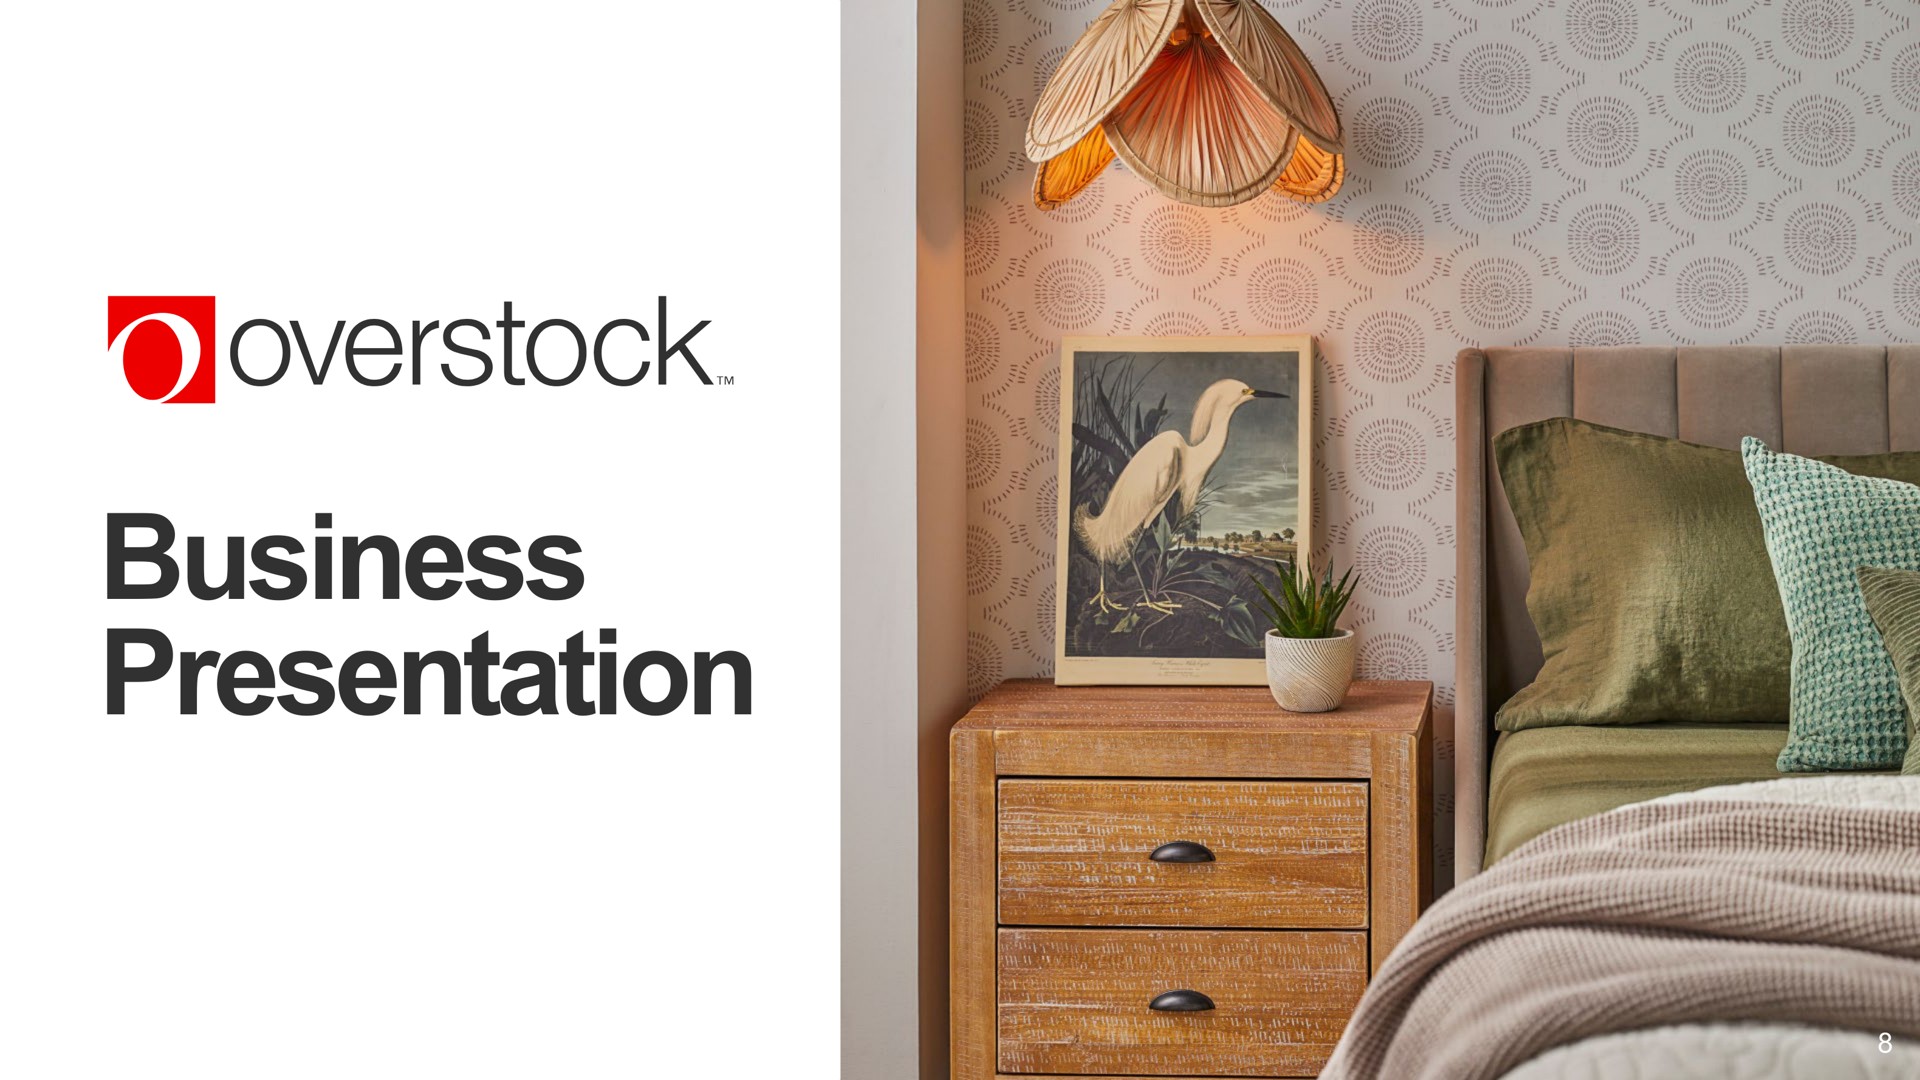 business presentation overstock | Overstock